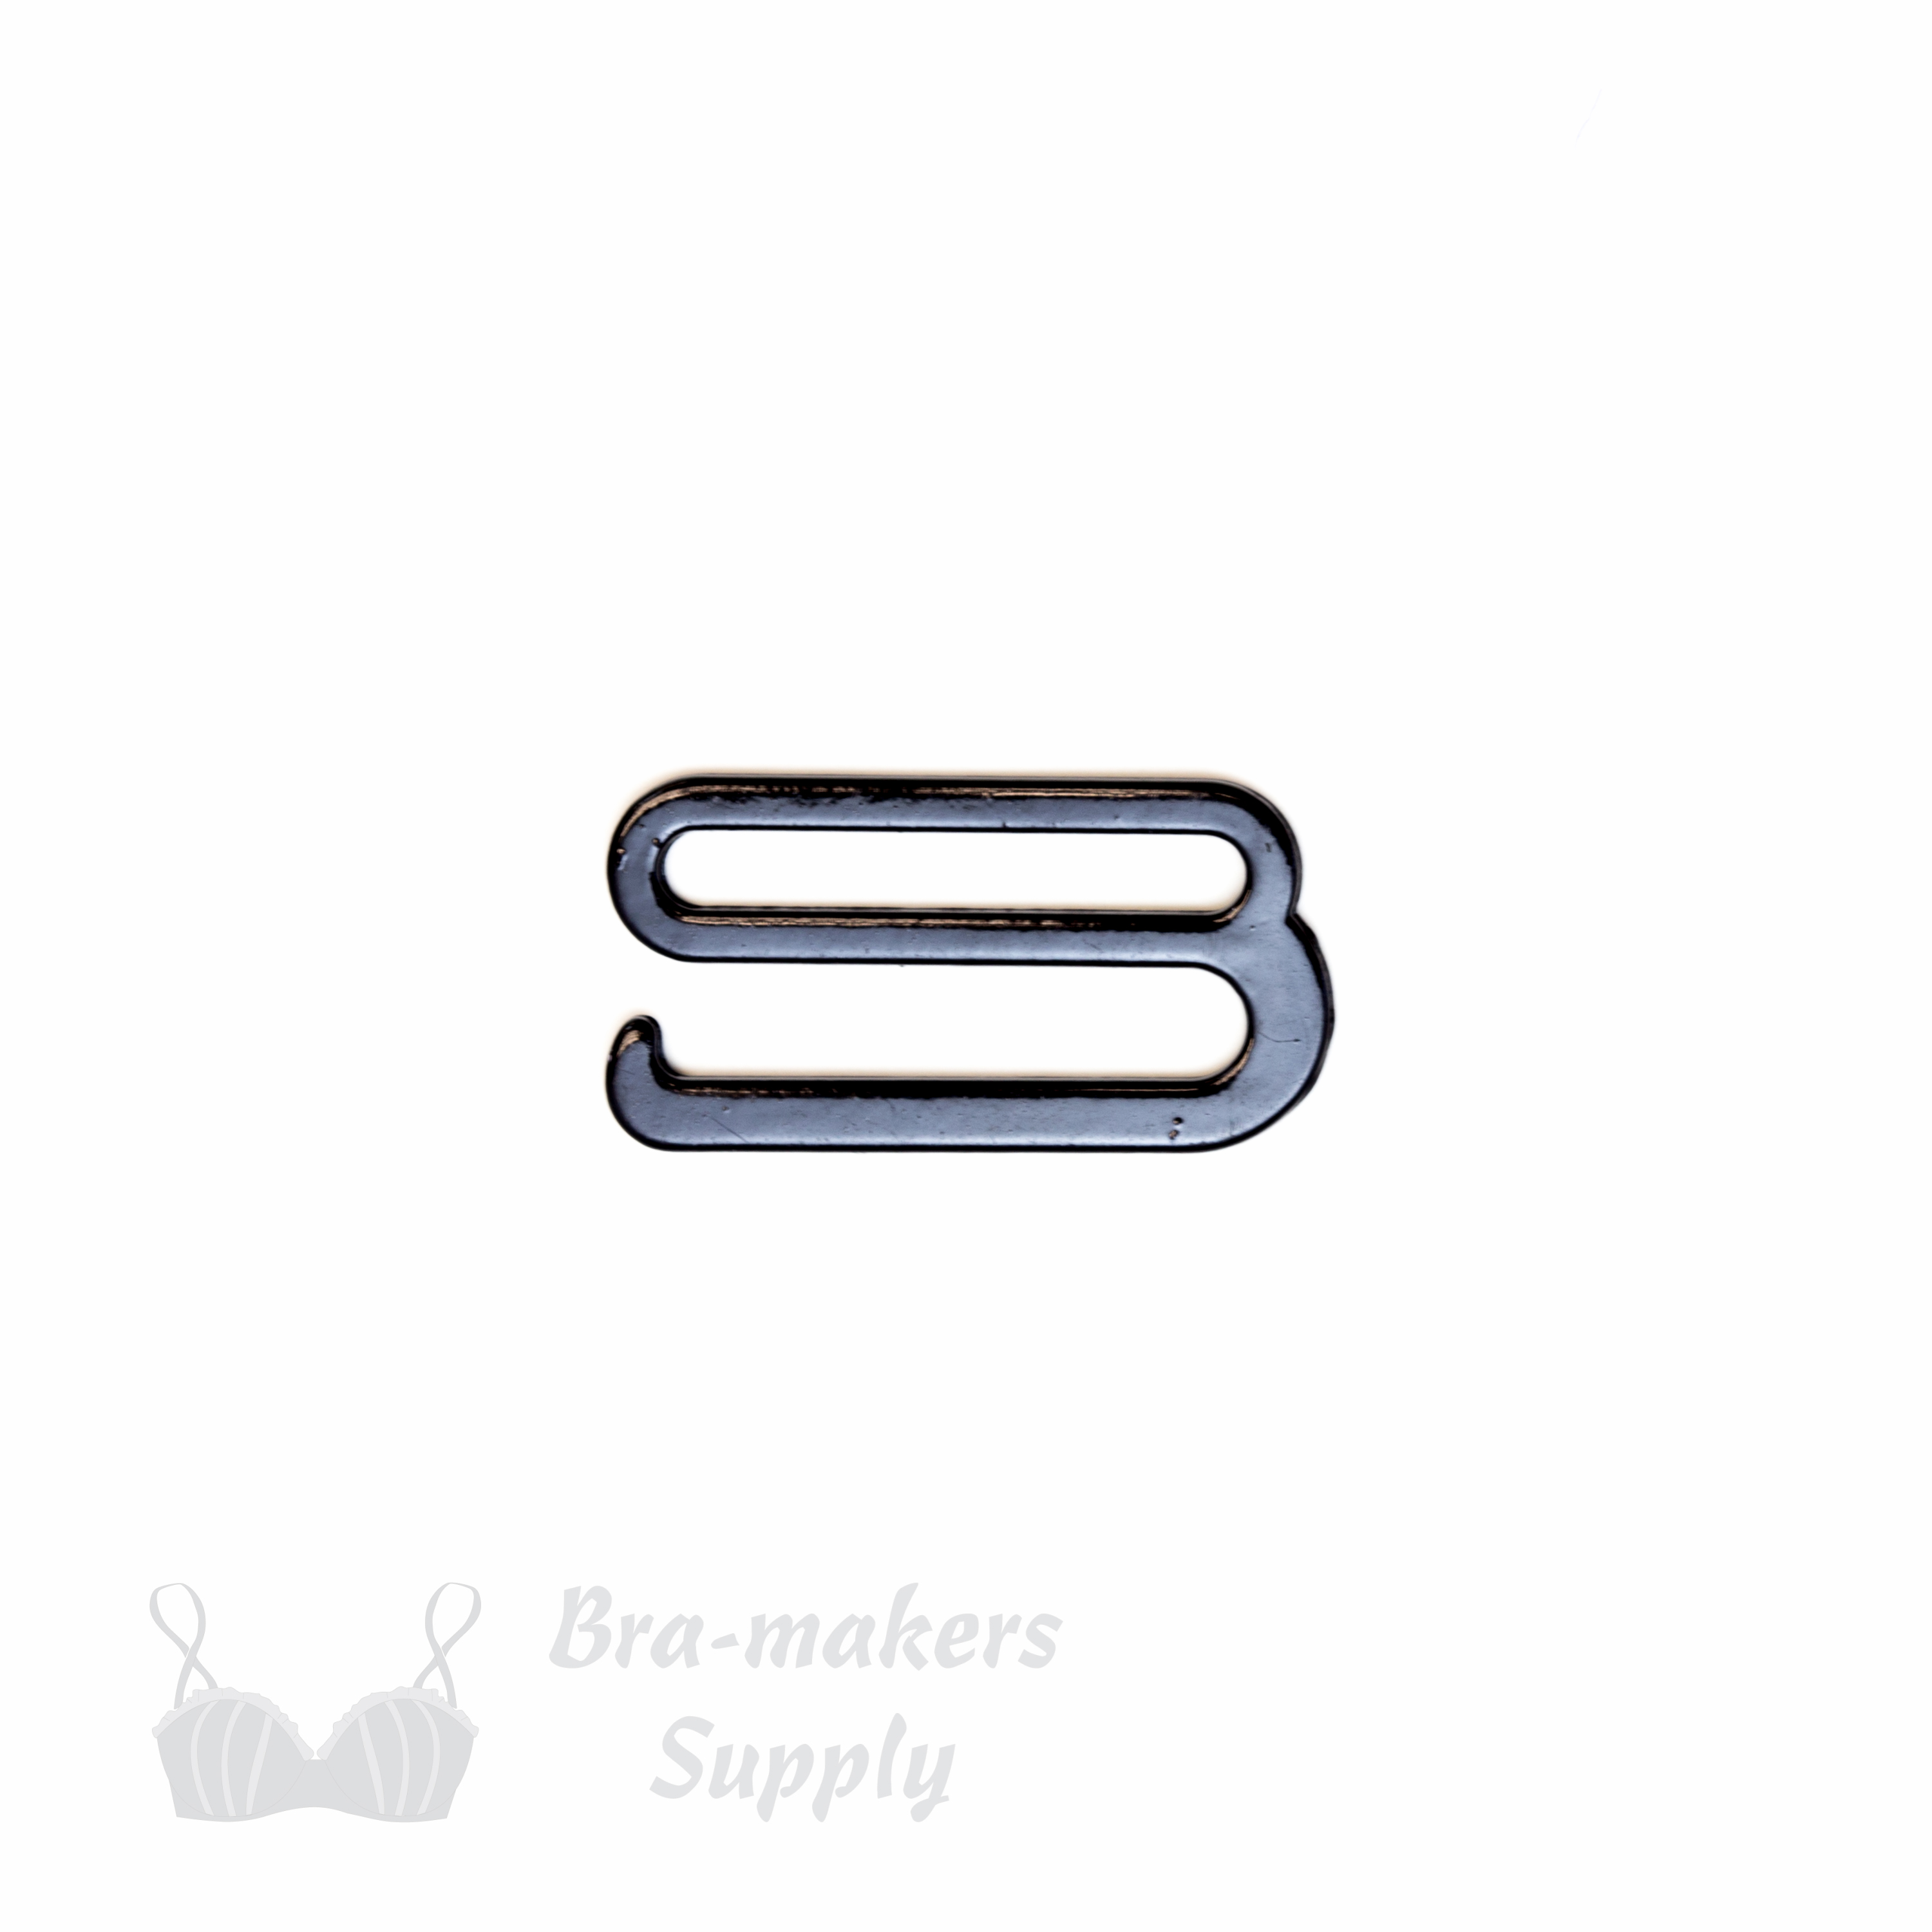 12 G Hooks 5/8 Silver Nickel Free Front Closing Bra Hook / Detachable  Straps Bra Making Swan Hooks